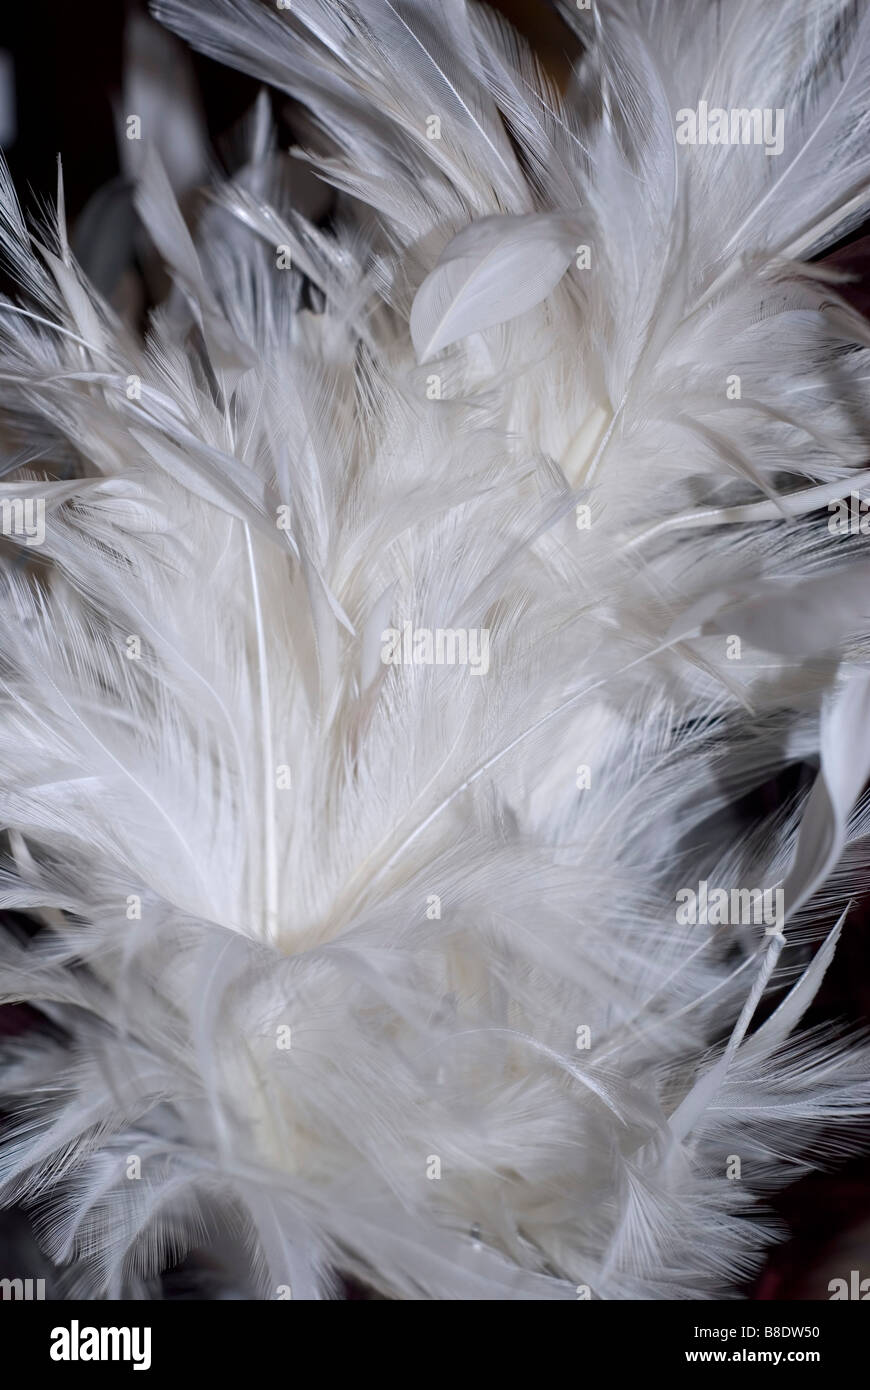 Boa de plumas blancas para fondo Foto de stock 995511